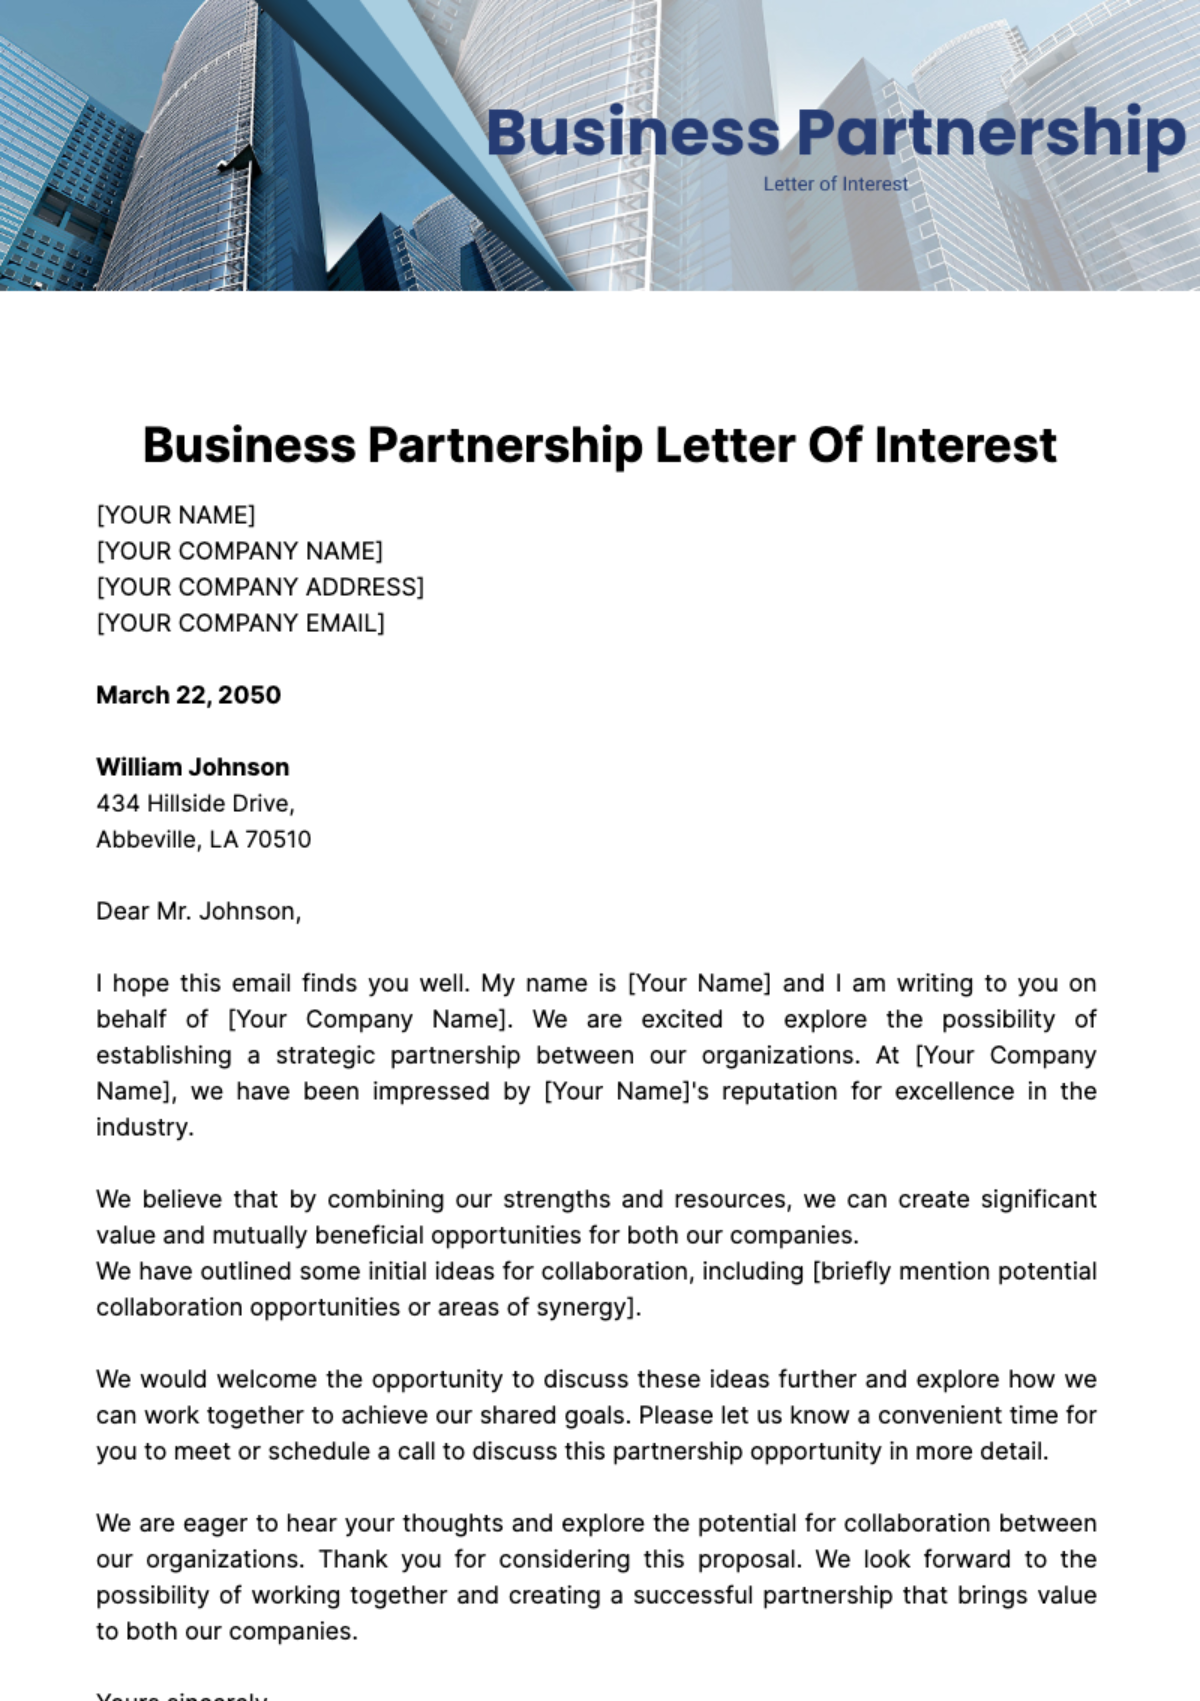 Business Partnership Letter of Interest Template